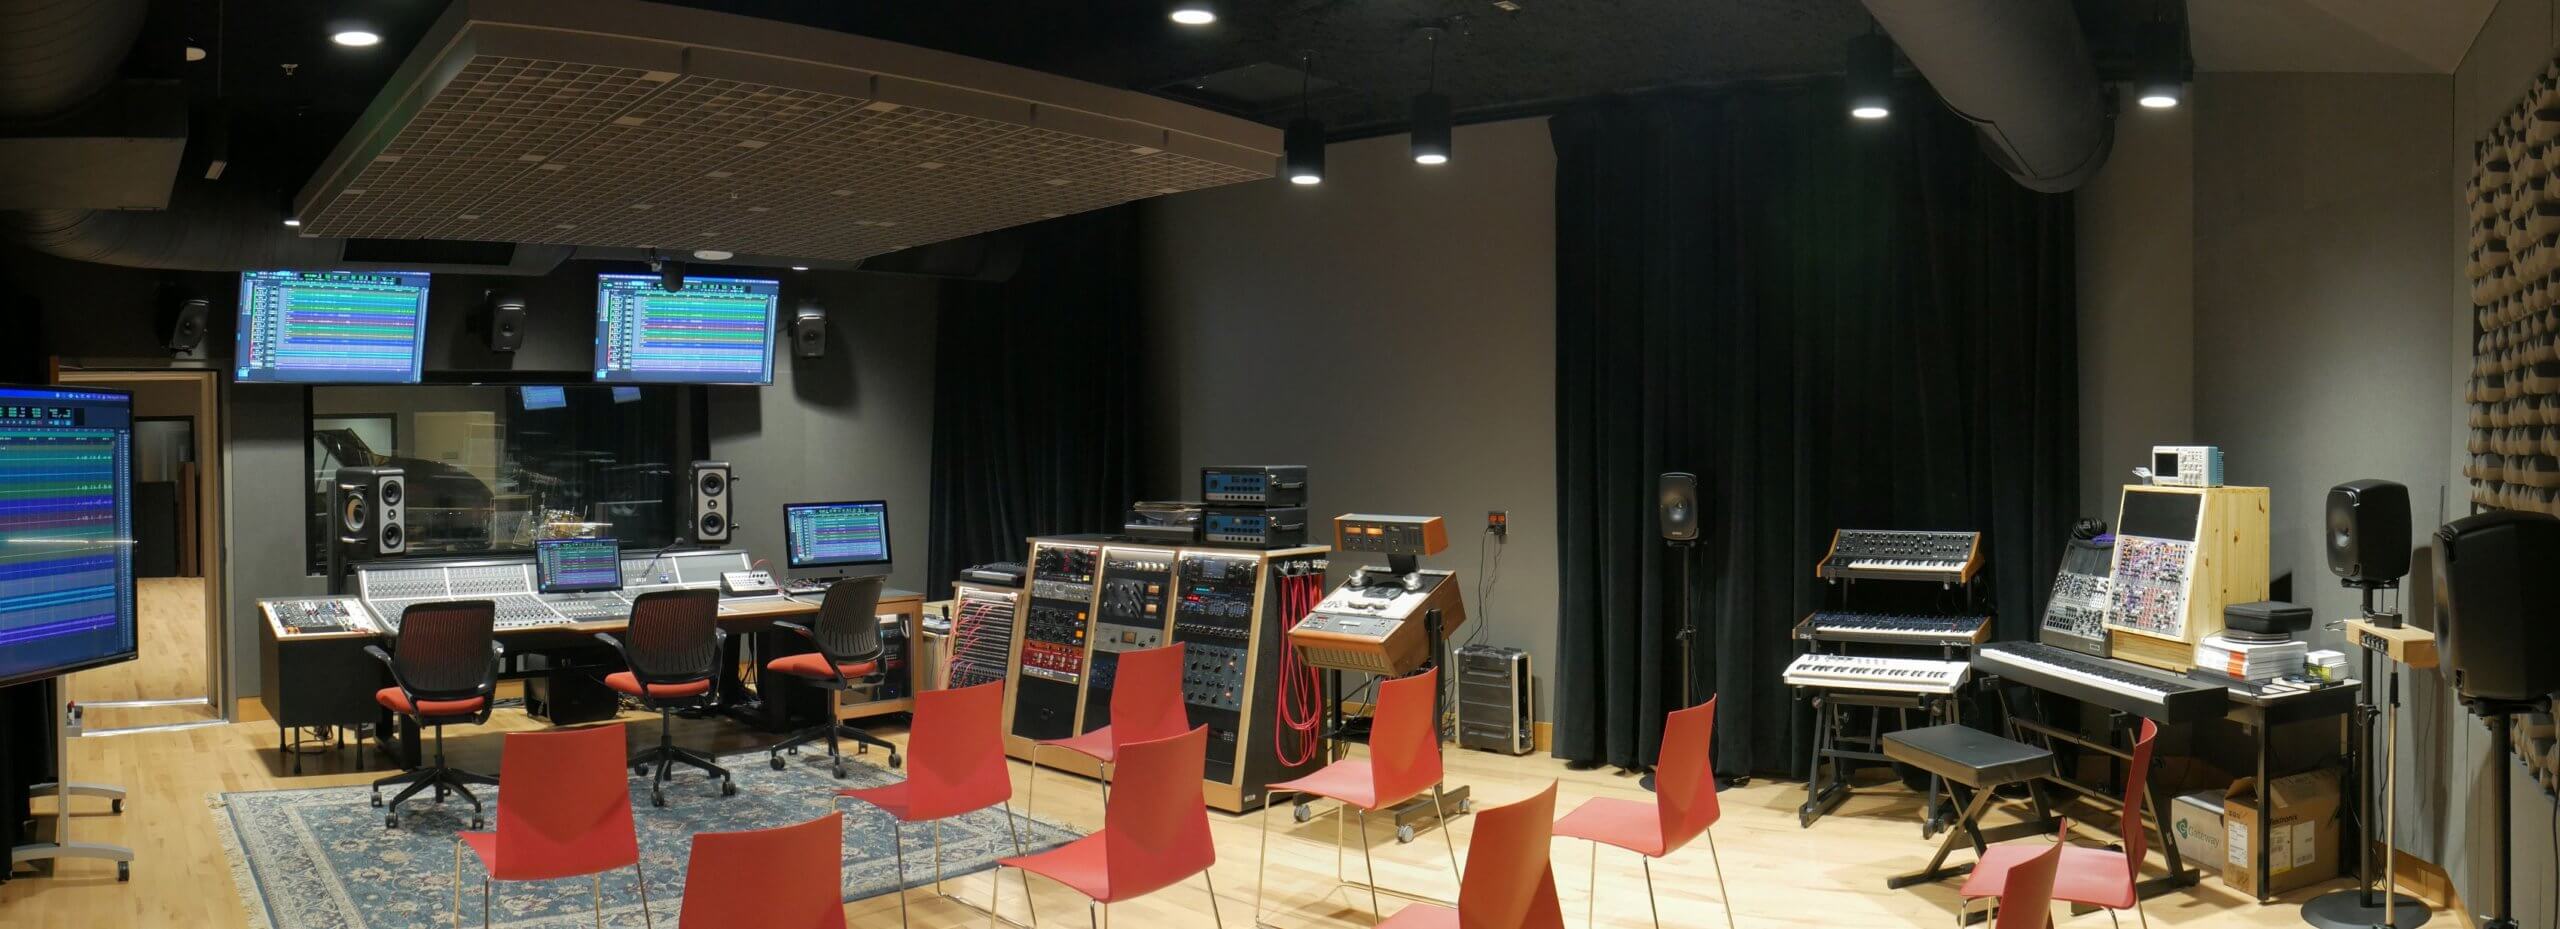 Classroom-sized control room